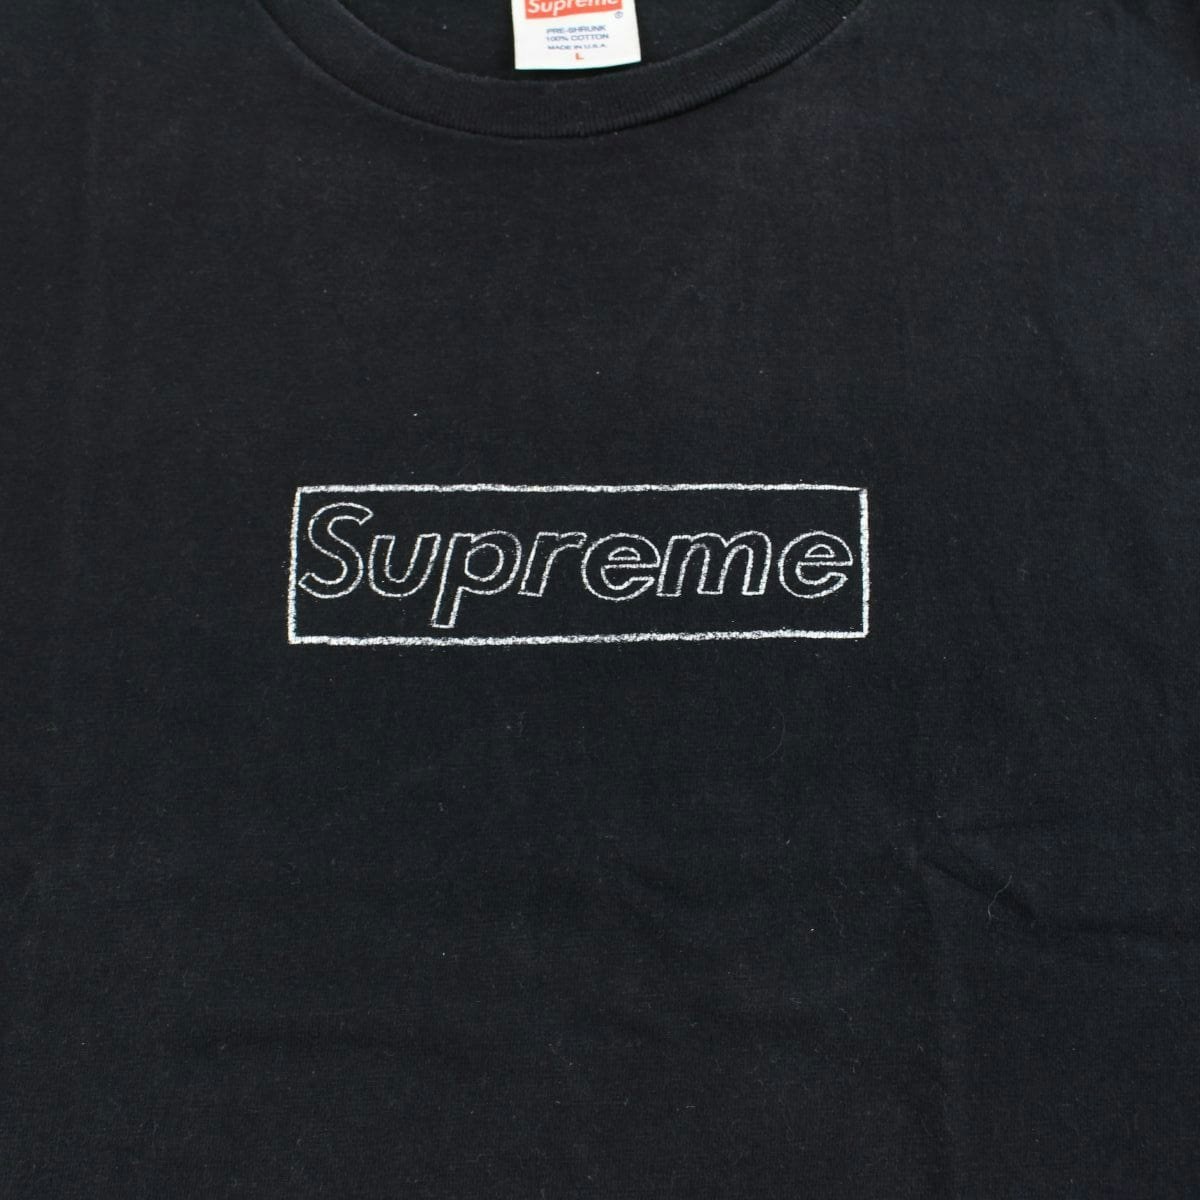 Supreme links with KAWS to create an artsy Box Logo T-shirt